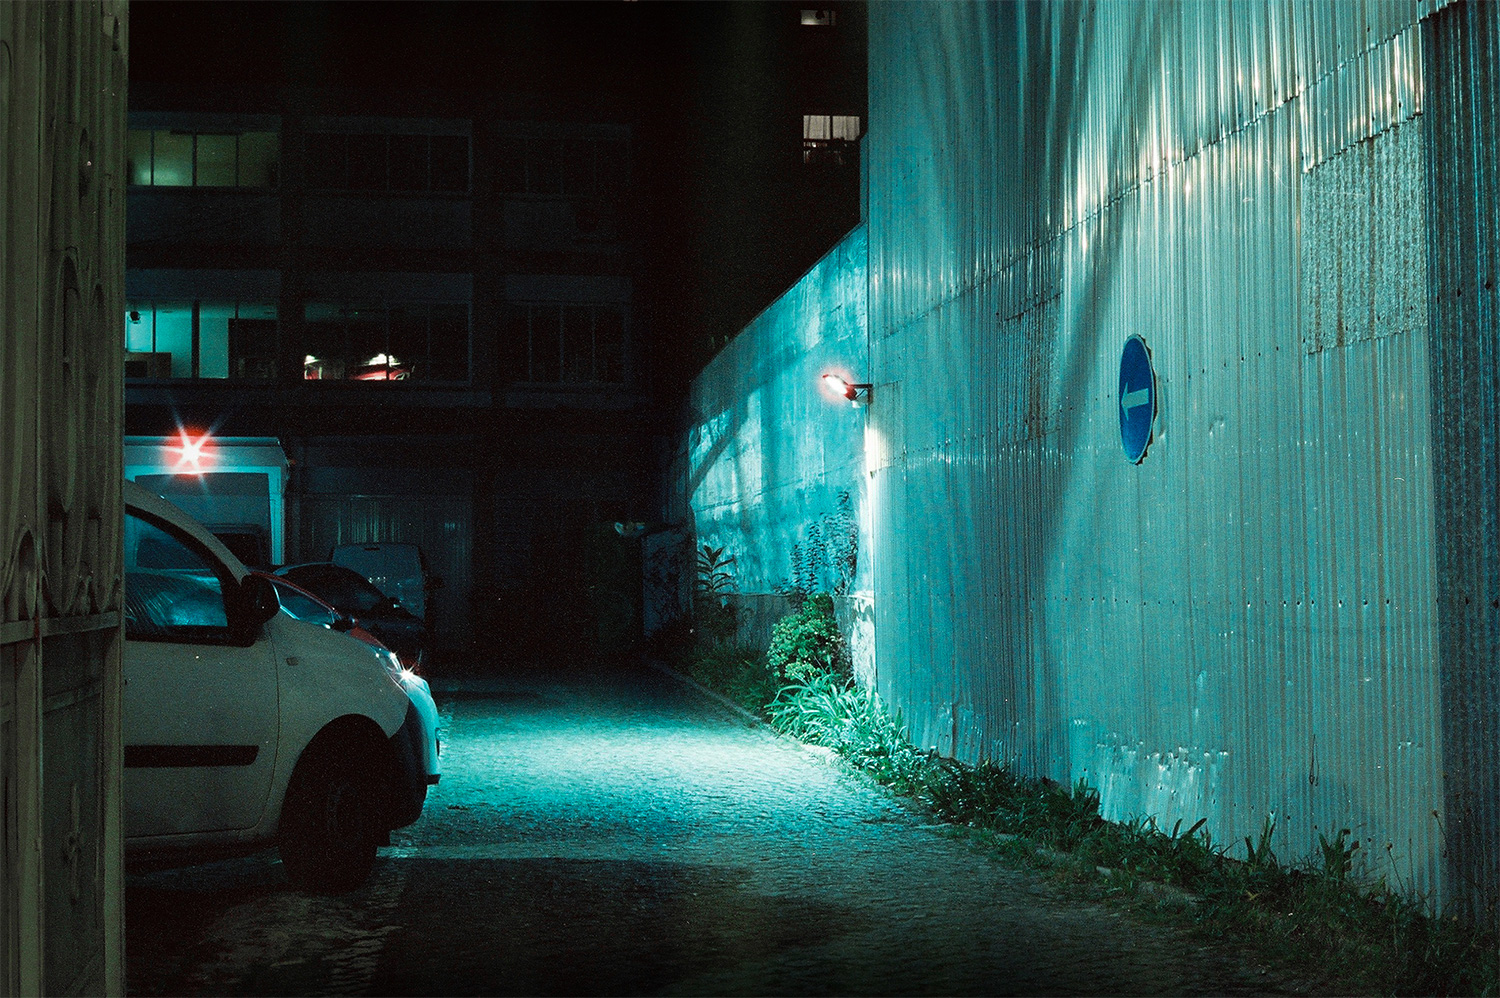 Analog photo of a driveway at night.